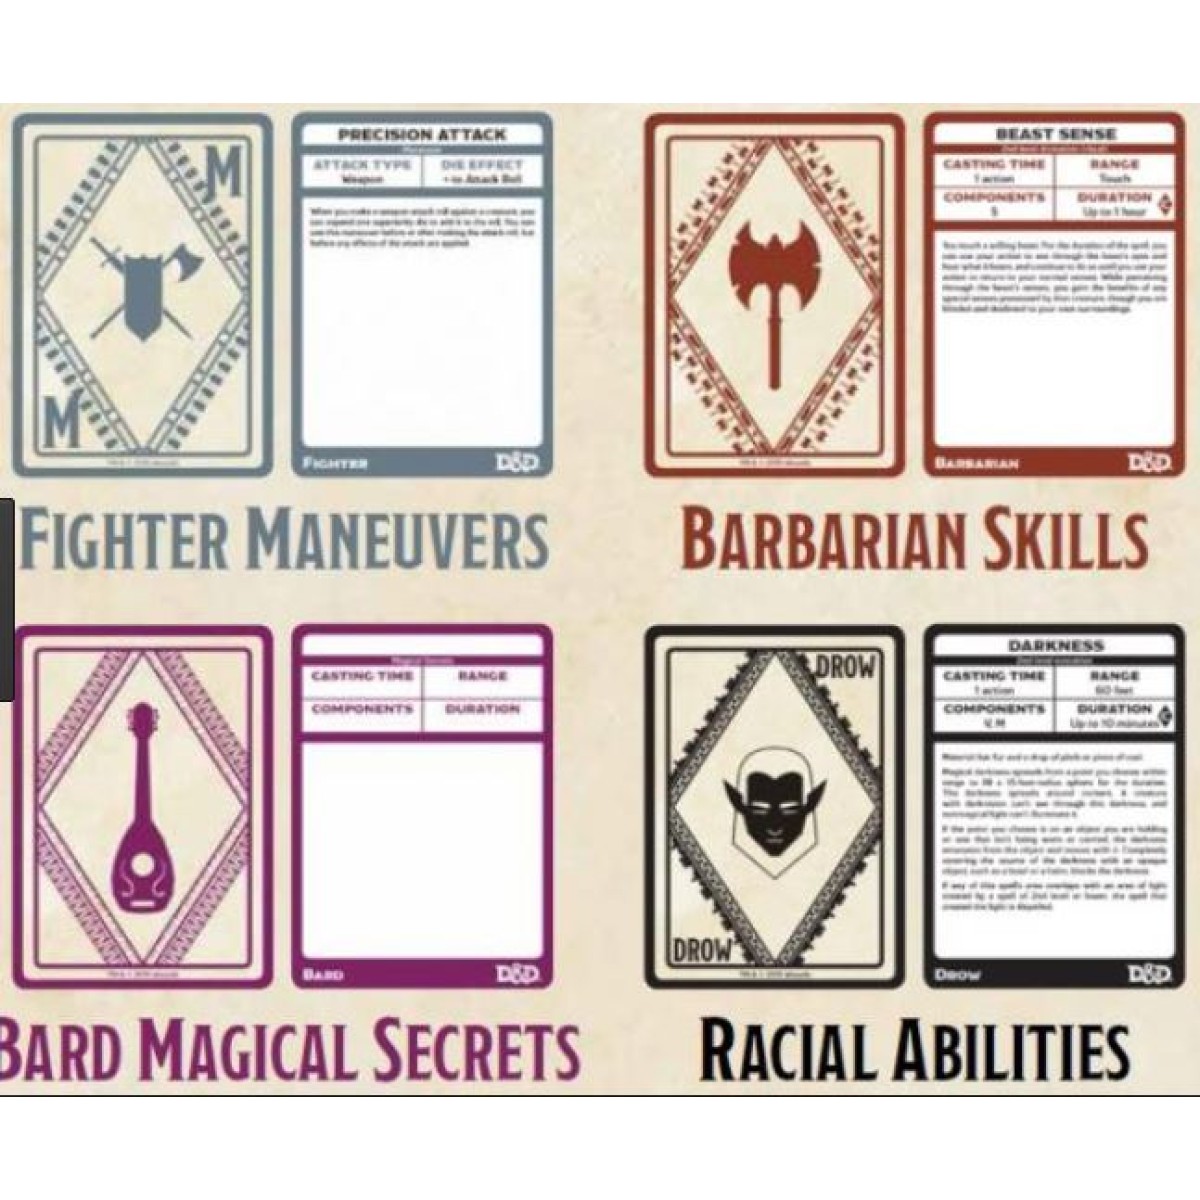 D&D Spellbook Cards Martial Powers & Races